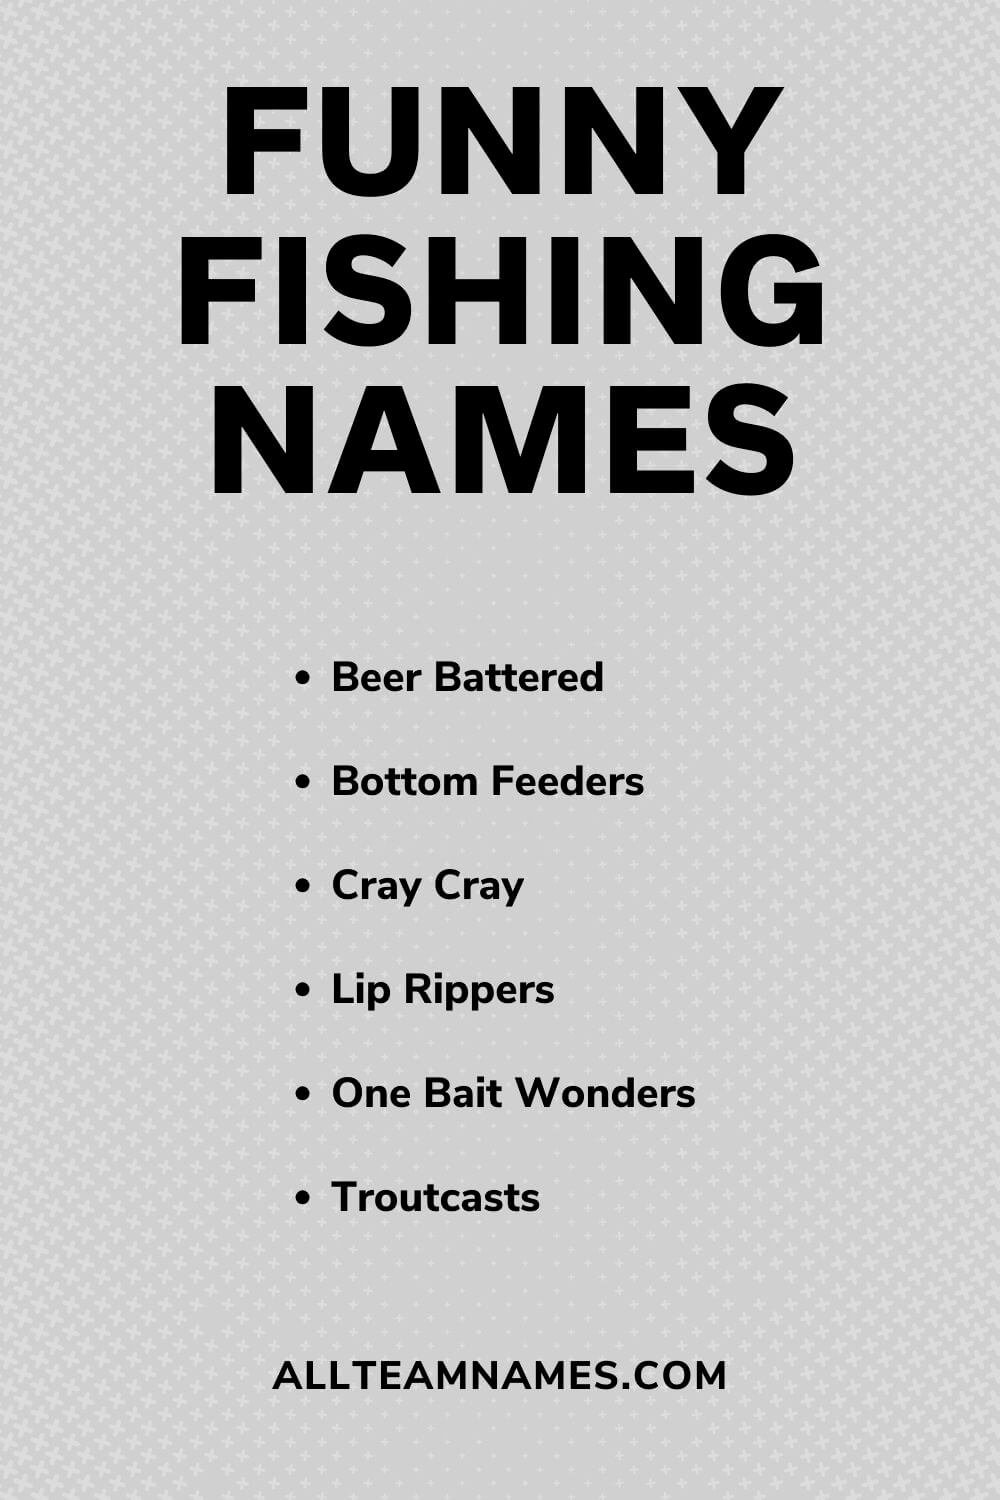 301+ Fishing Team Names (Funny, Cool & Puns)